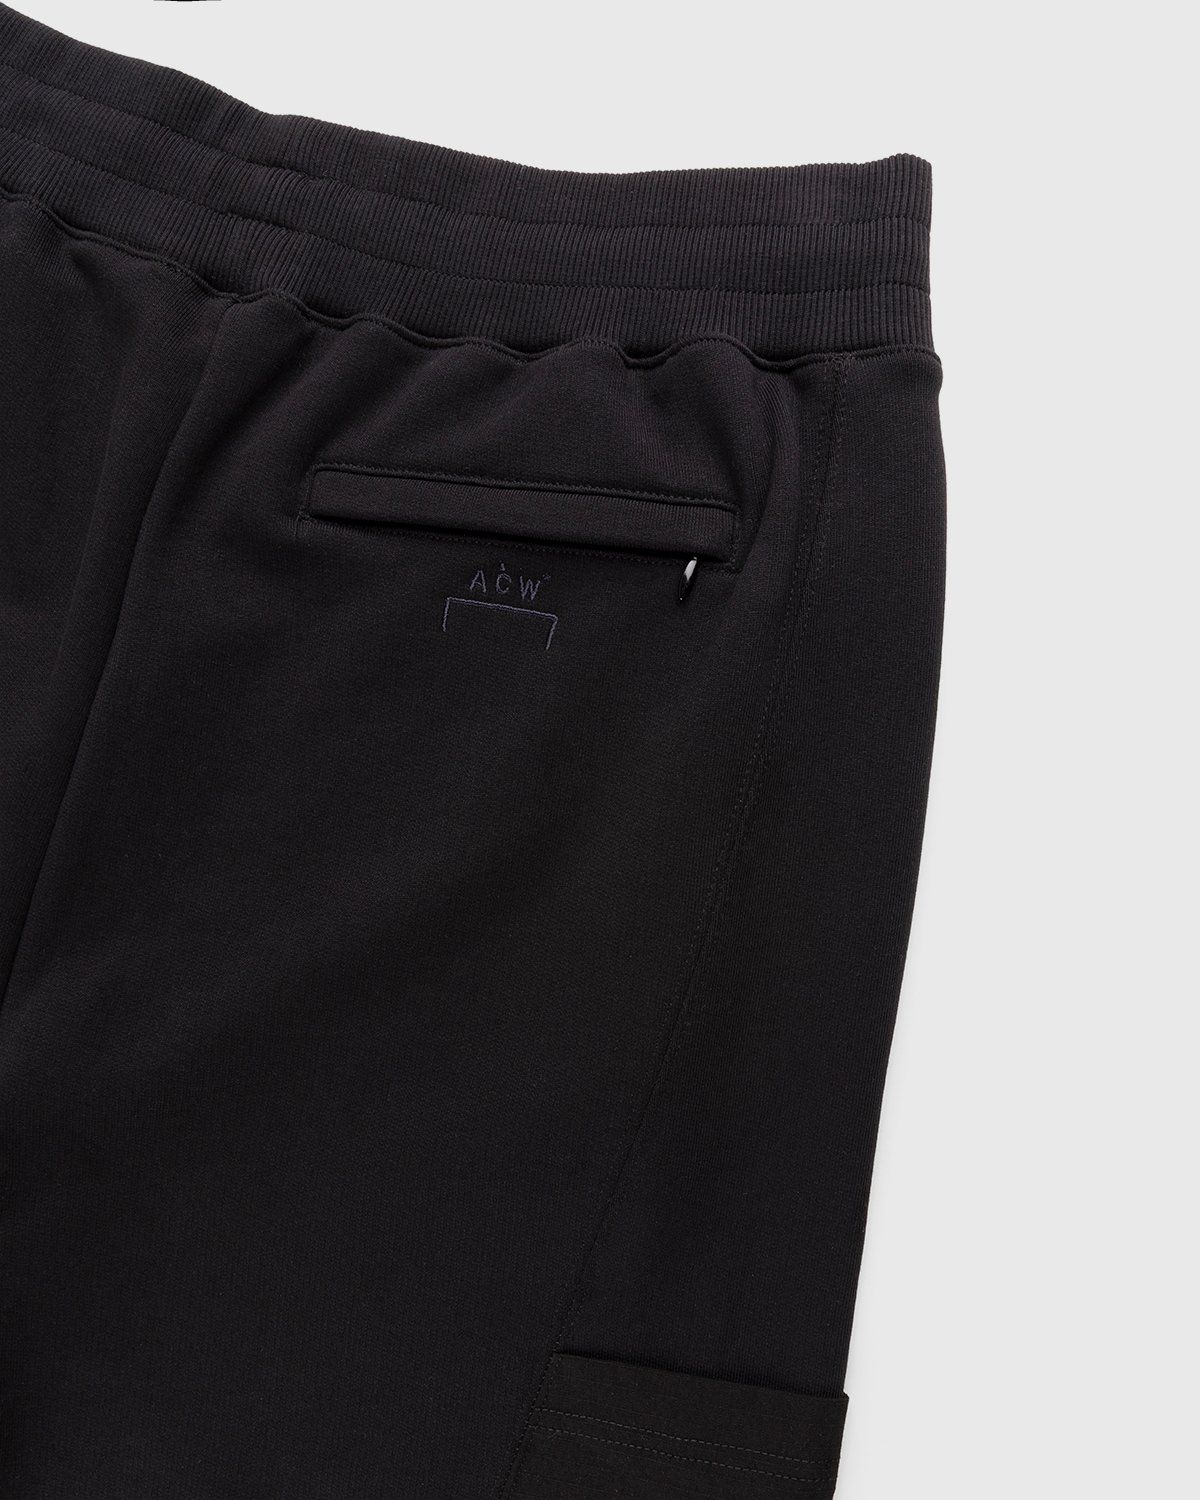 A-Cold-Wall* – Vault Shorts Black - Bermuda Cuts - Black - Image 3